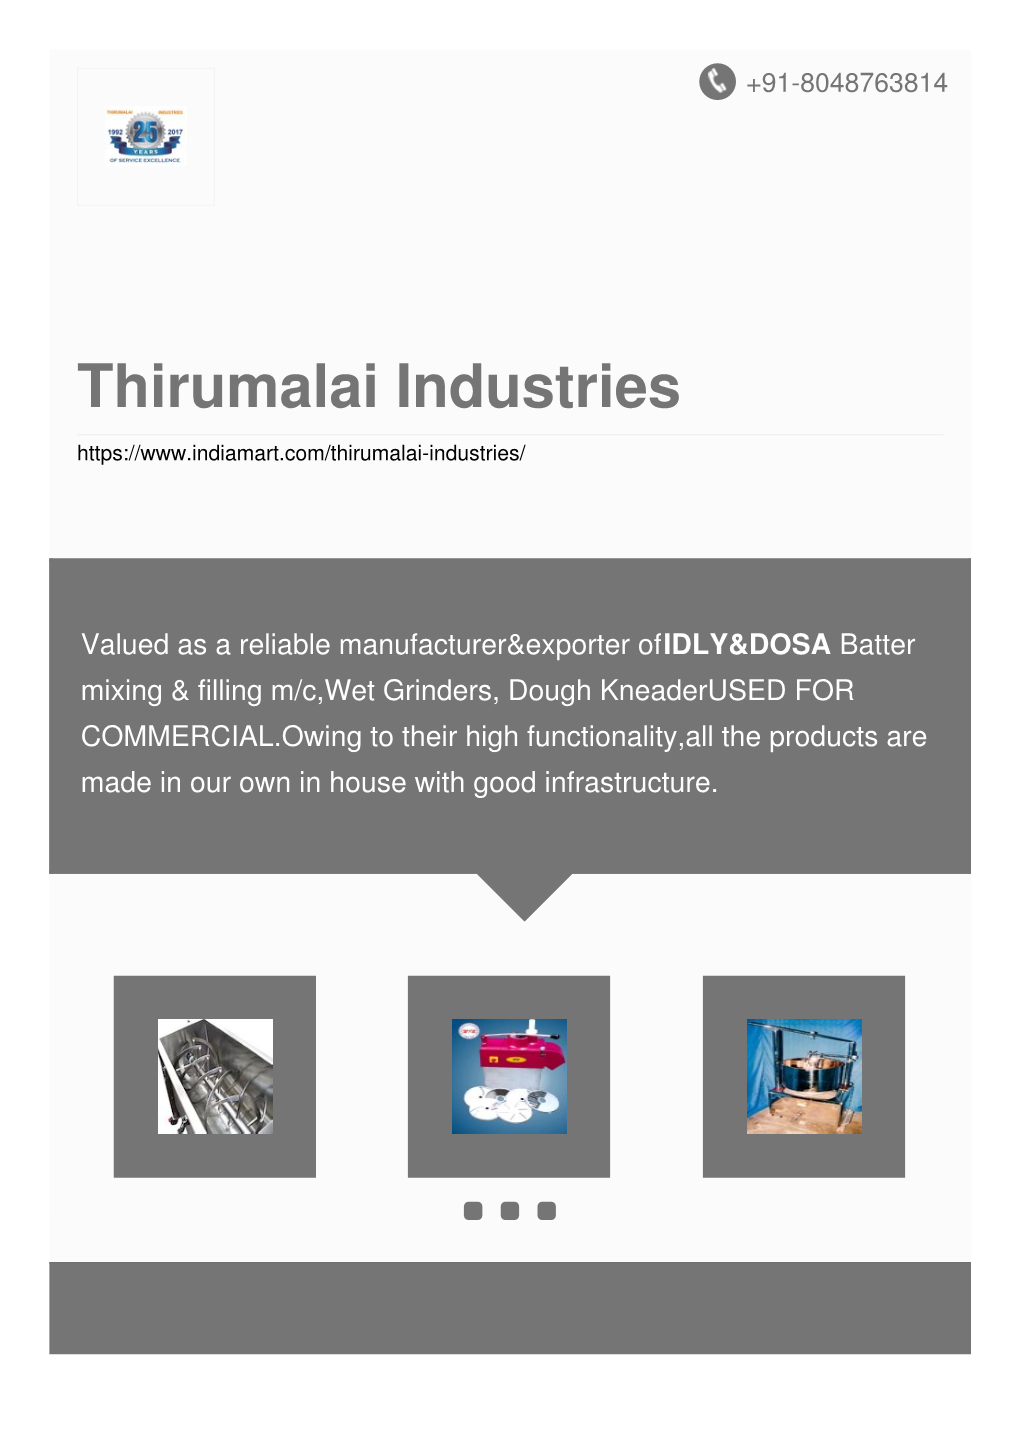 Thirumalai Industries